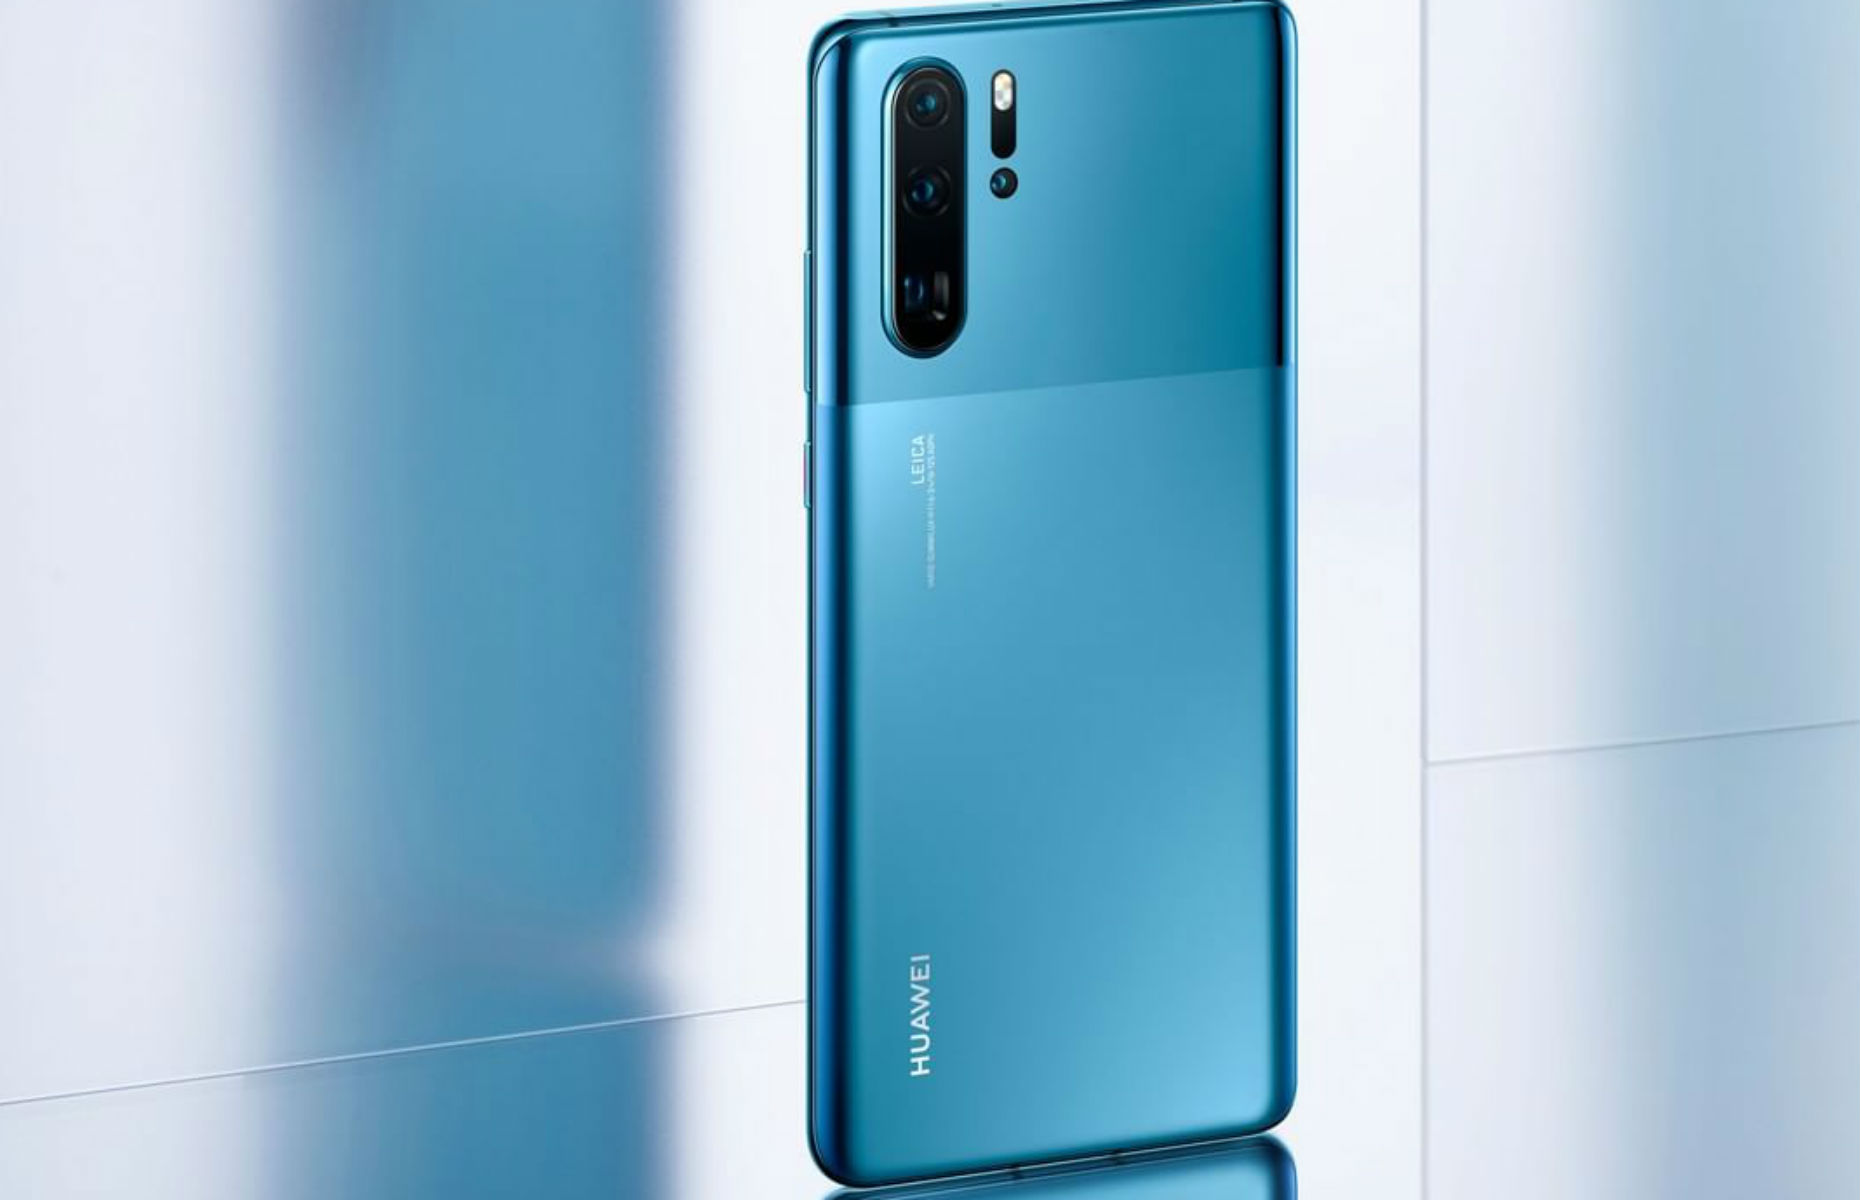 Huawei P30 Pro phone